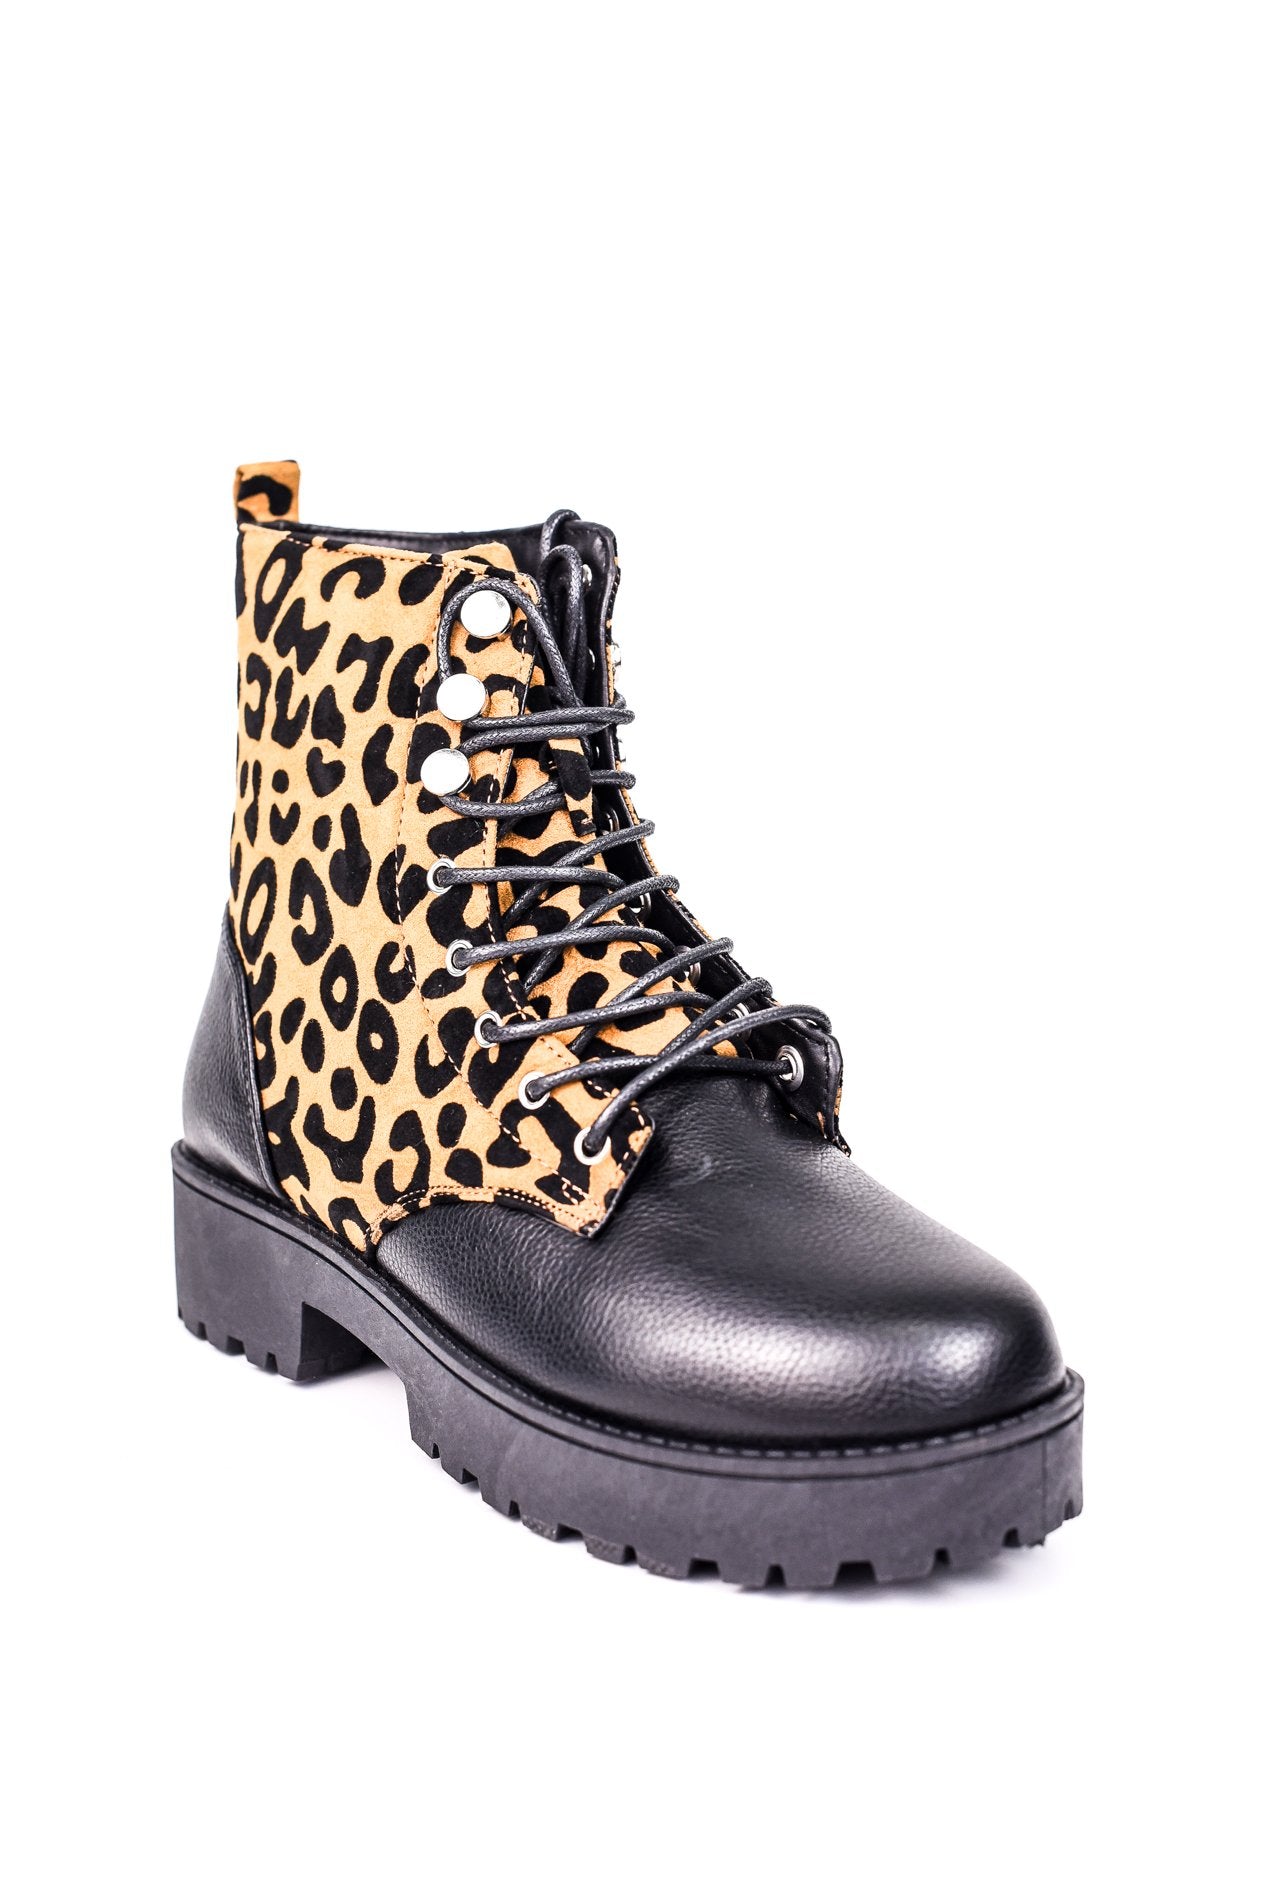 black leopard boots